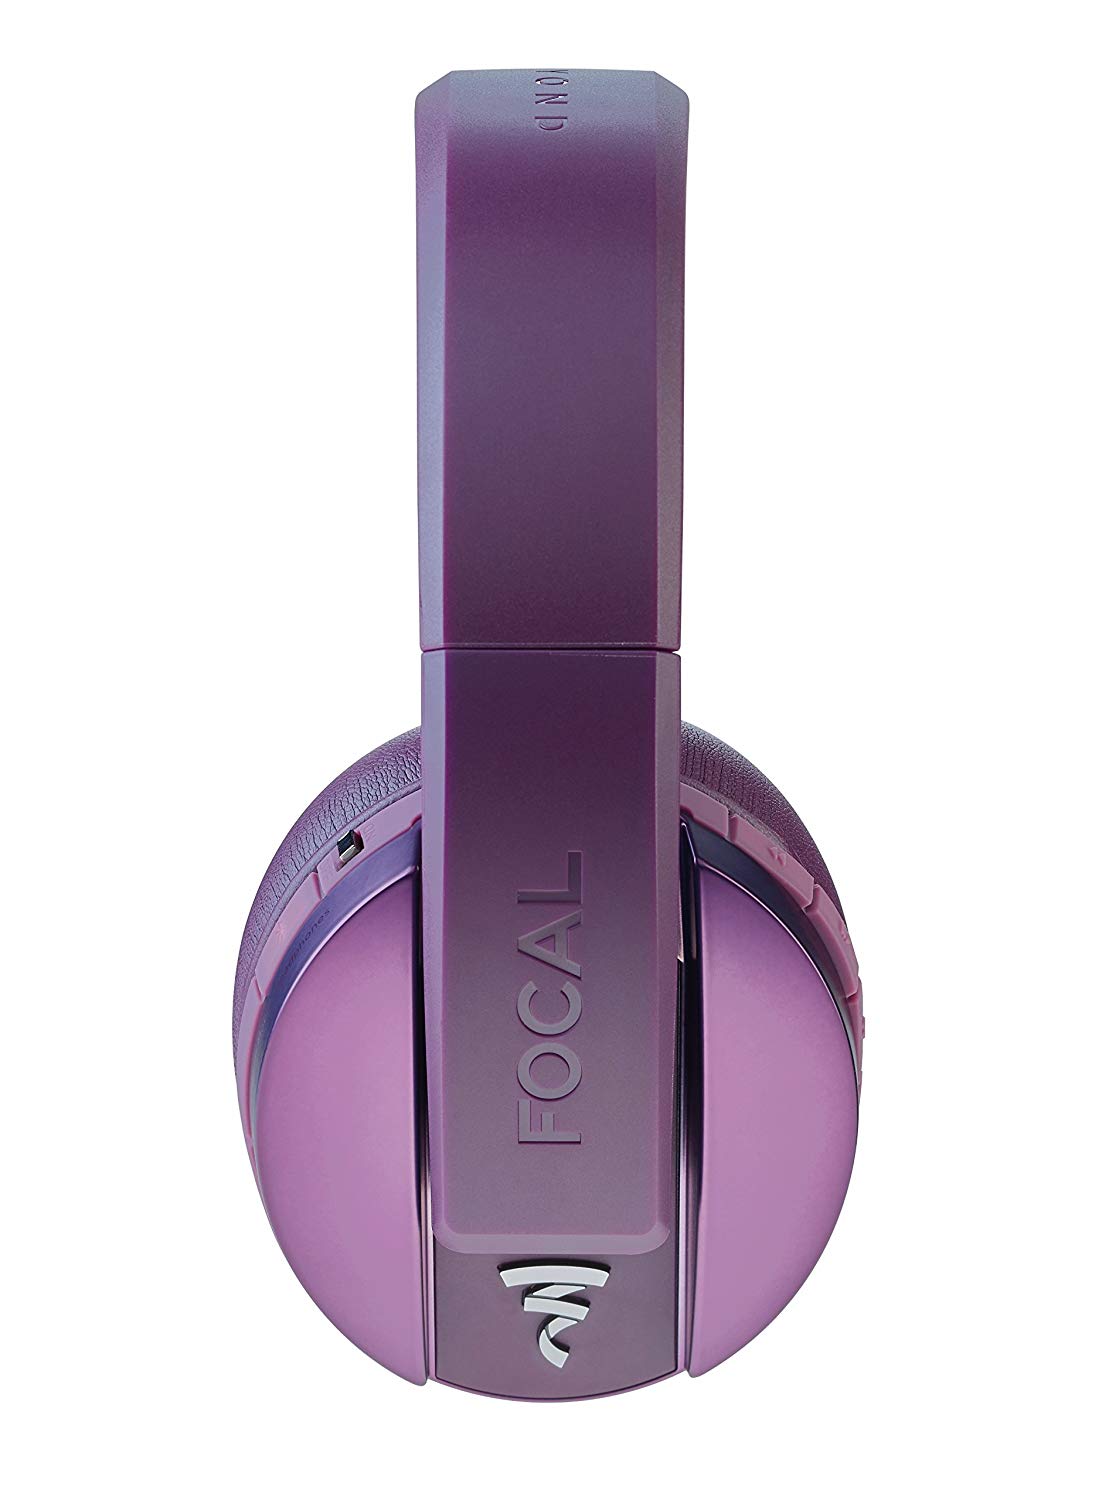 FOCAL Listen Wireless Headphones Purple